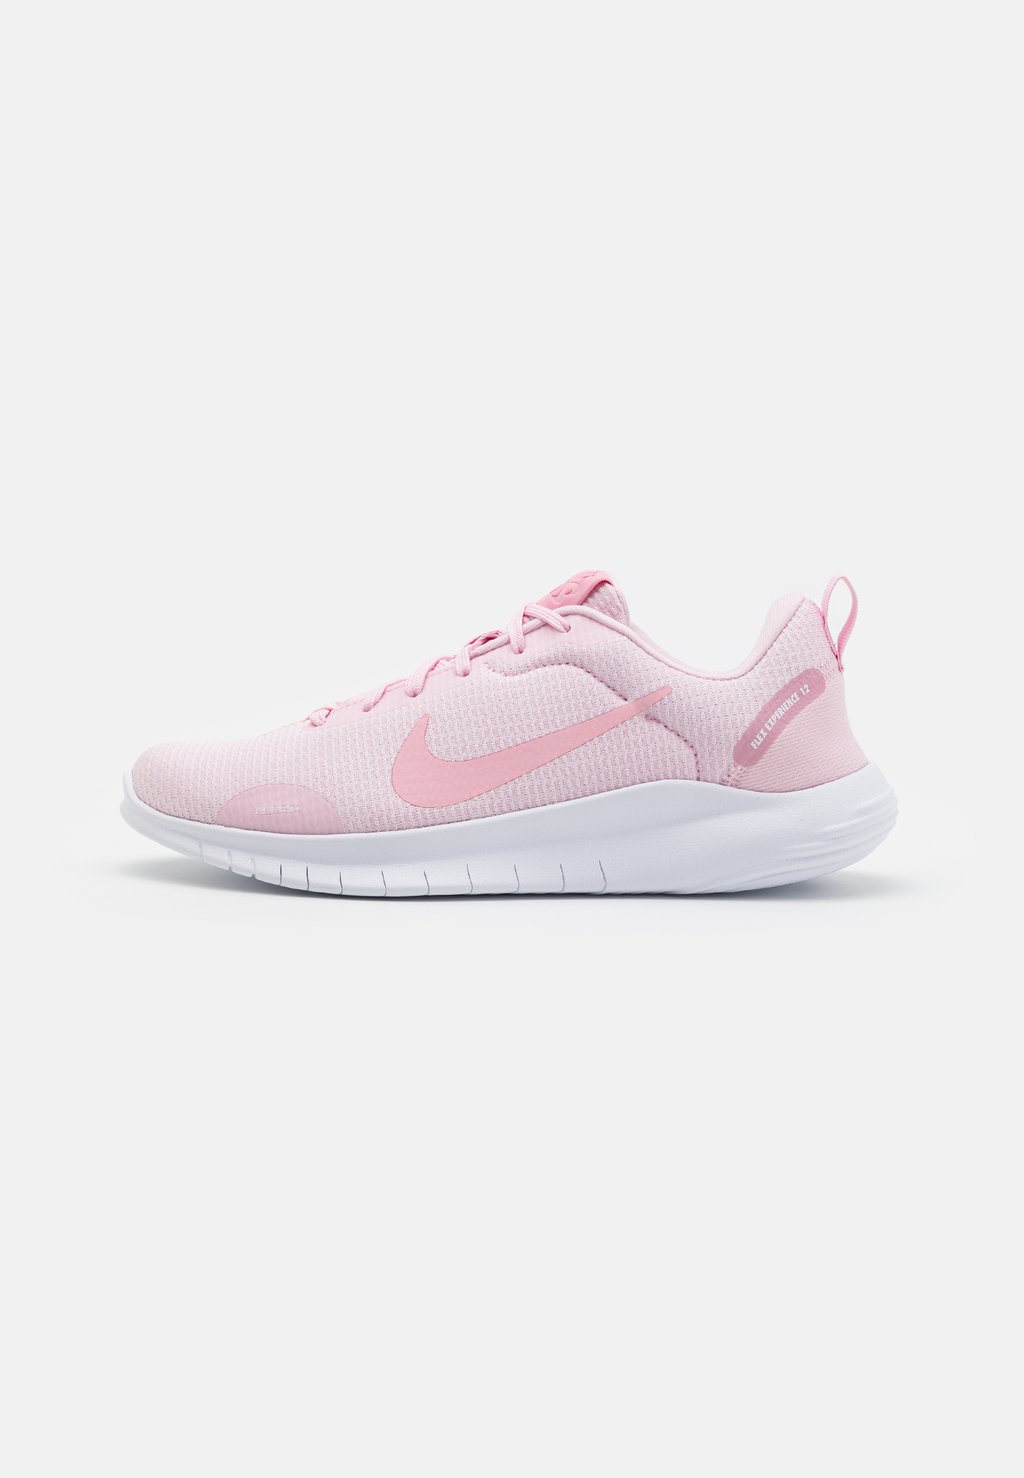 Нейтральные кроссовки FLEX EXPERIENCE RN 12 Nike, цвет pink foam/white/pearl pink/med soft pink цена и фото